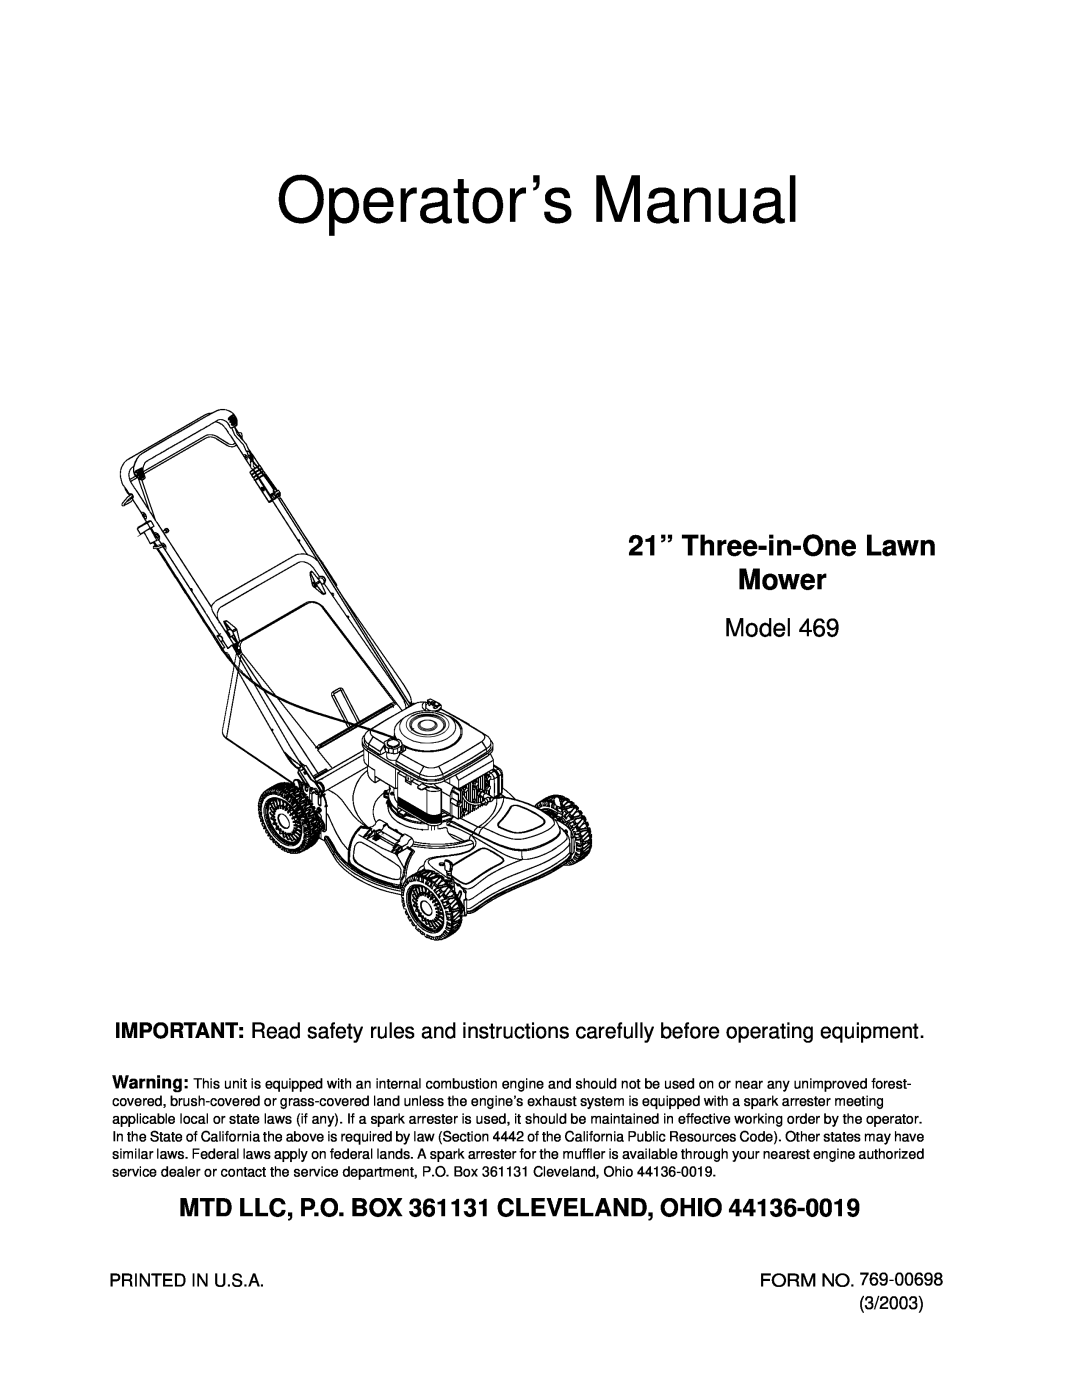 MTD 469 manual Operator’s Manual, 21” Three-in-One Lawn Mower, Model, MTD LLC, P.O. BOX 361131 CLEVELAND, OHIO 